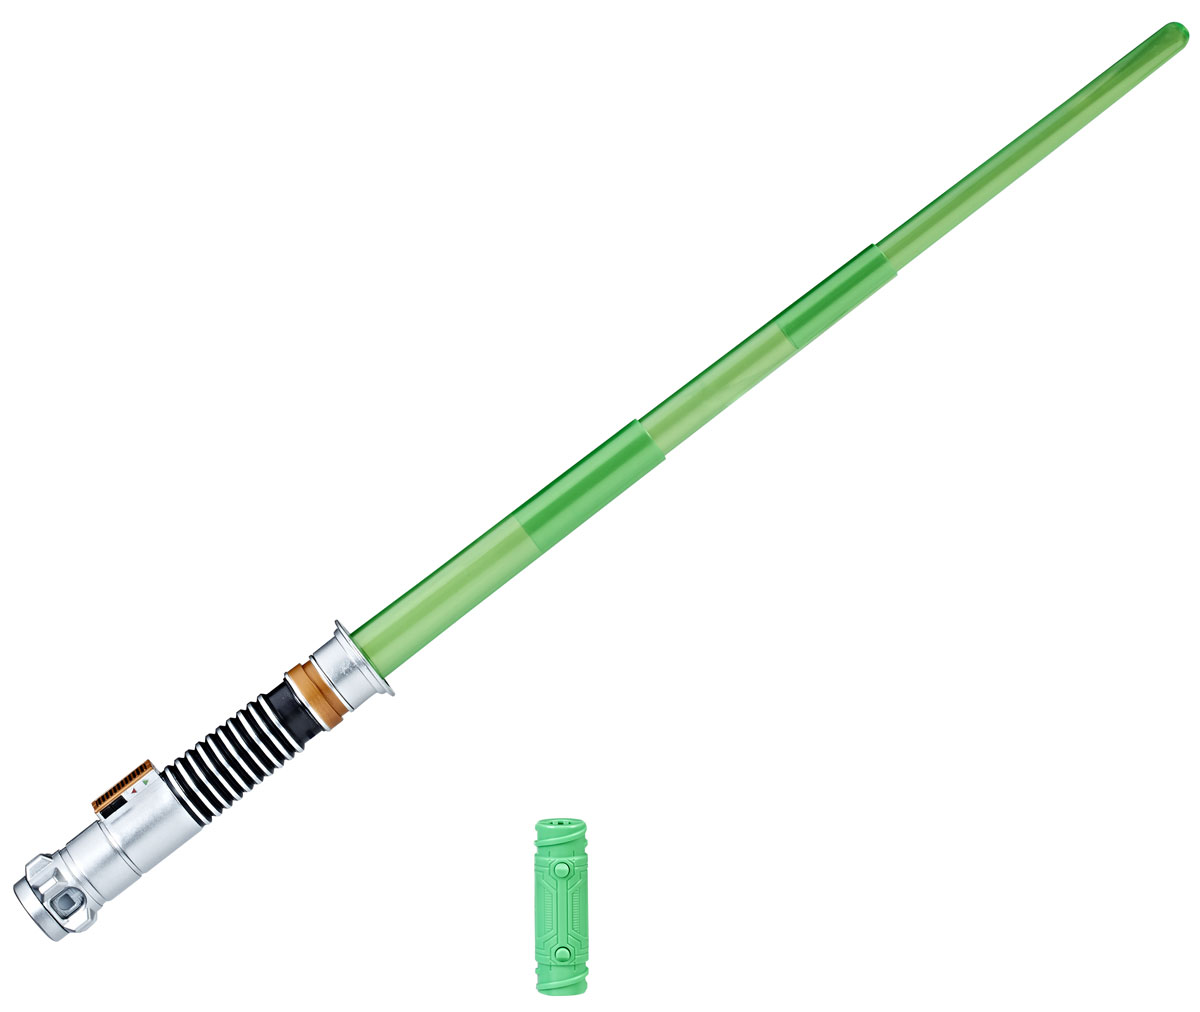 Star Wars Электронный световой меч Luke Skywalker